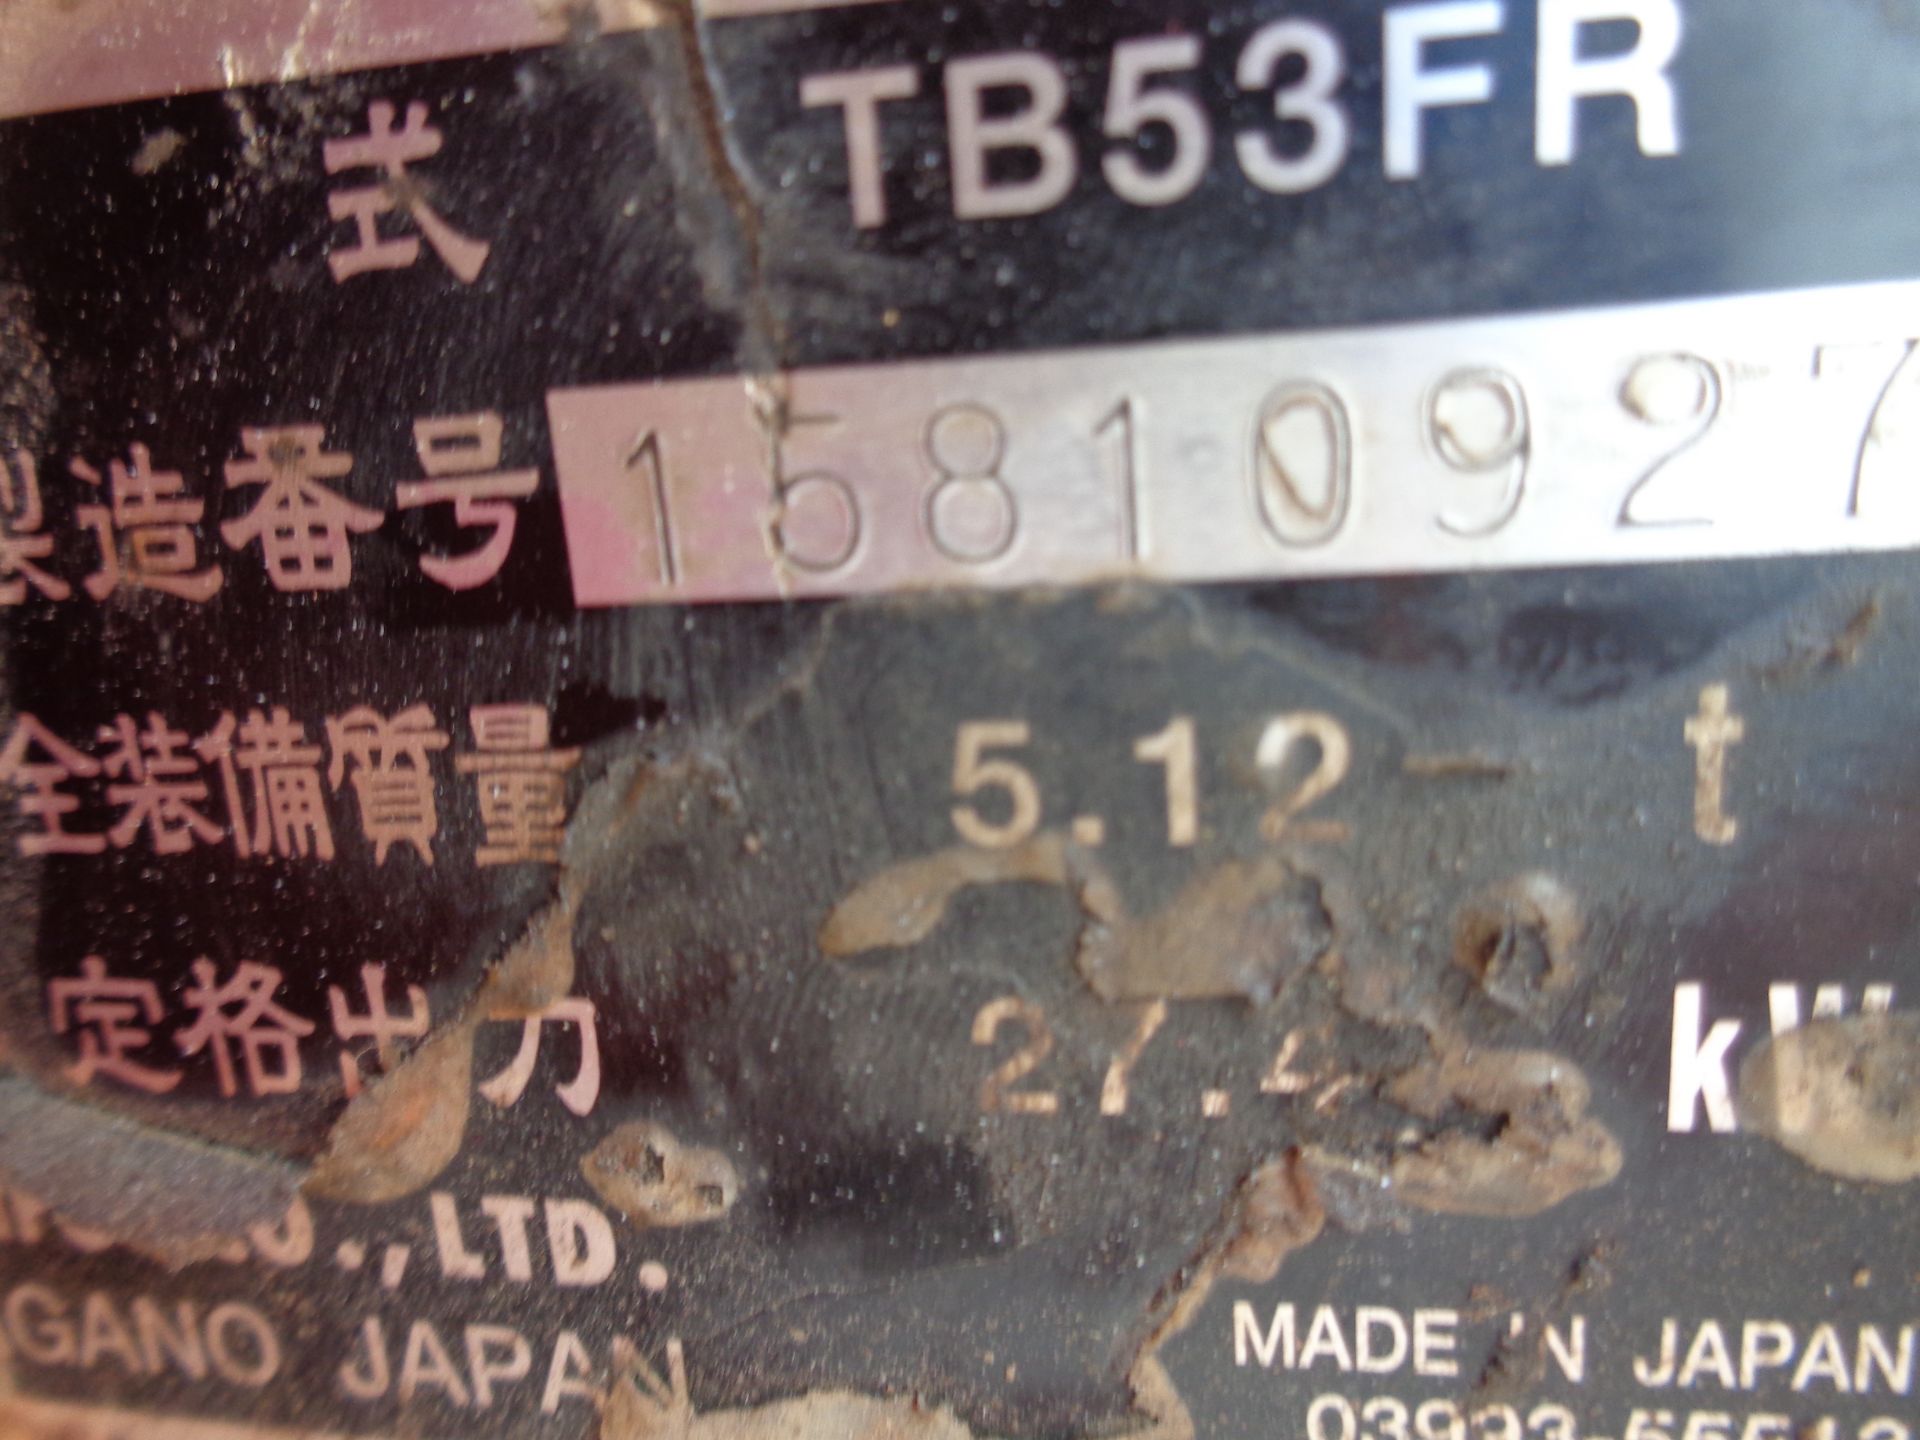 Takeuchi TB53FR Mini Excavator - Image 8 of 8